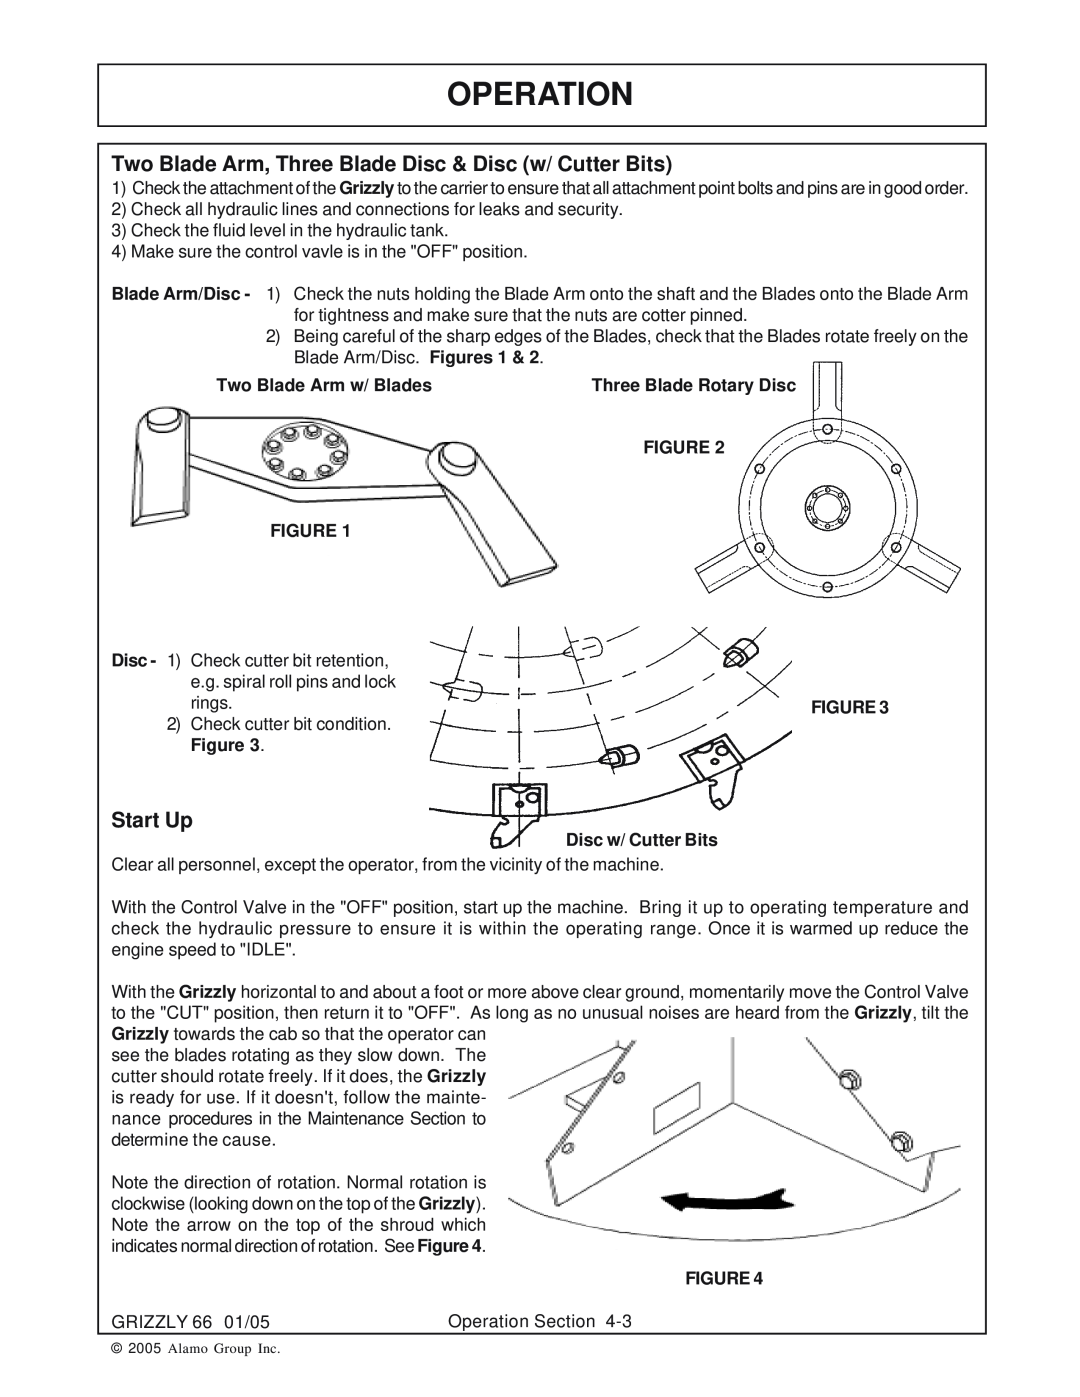 Alamo 66 manual Operation, Two Blade Arm w/ Blades, Three Blade Rotary Disc, Disc w/ Cutter Bits 